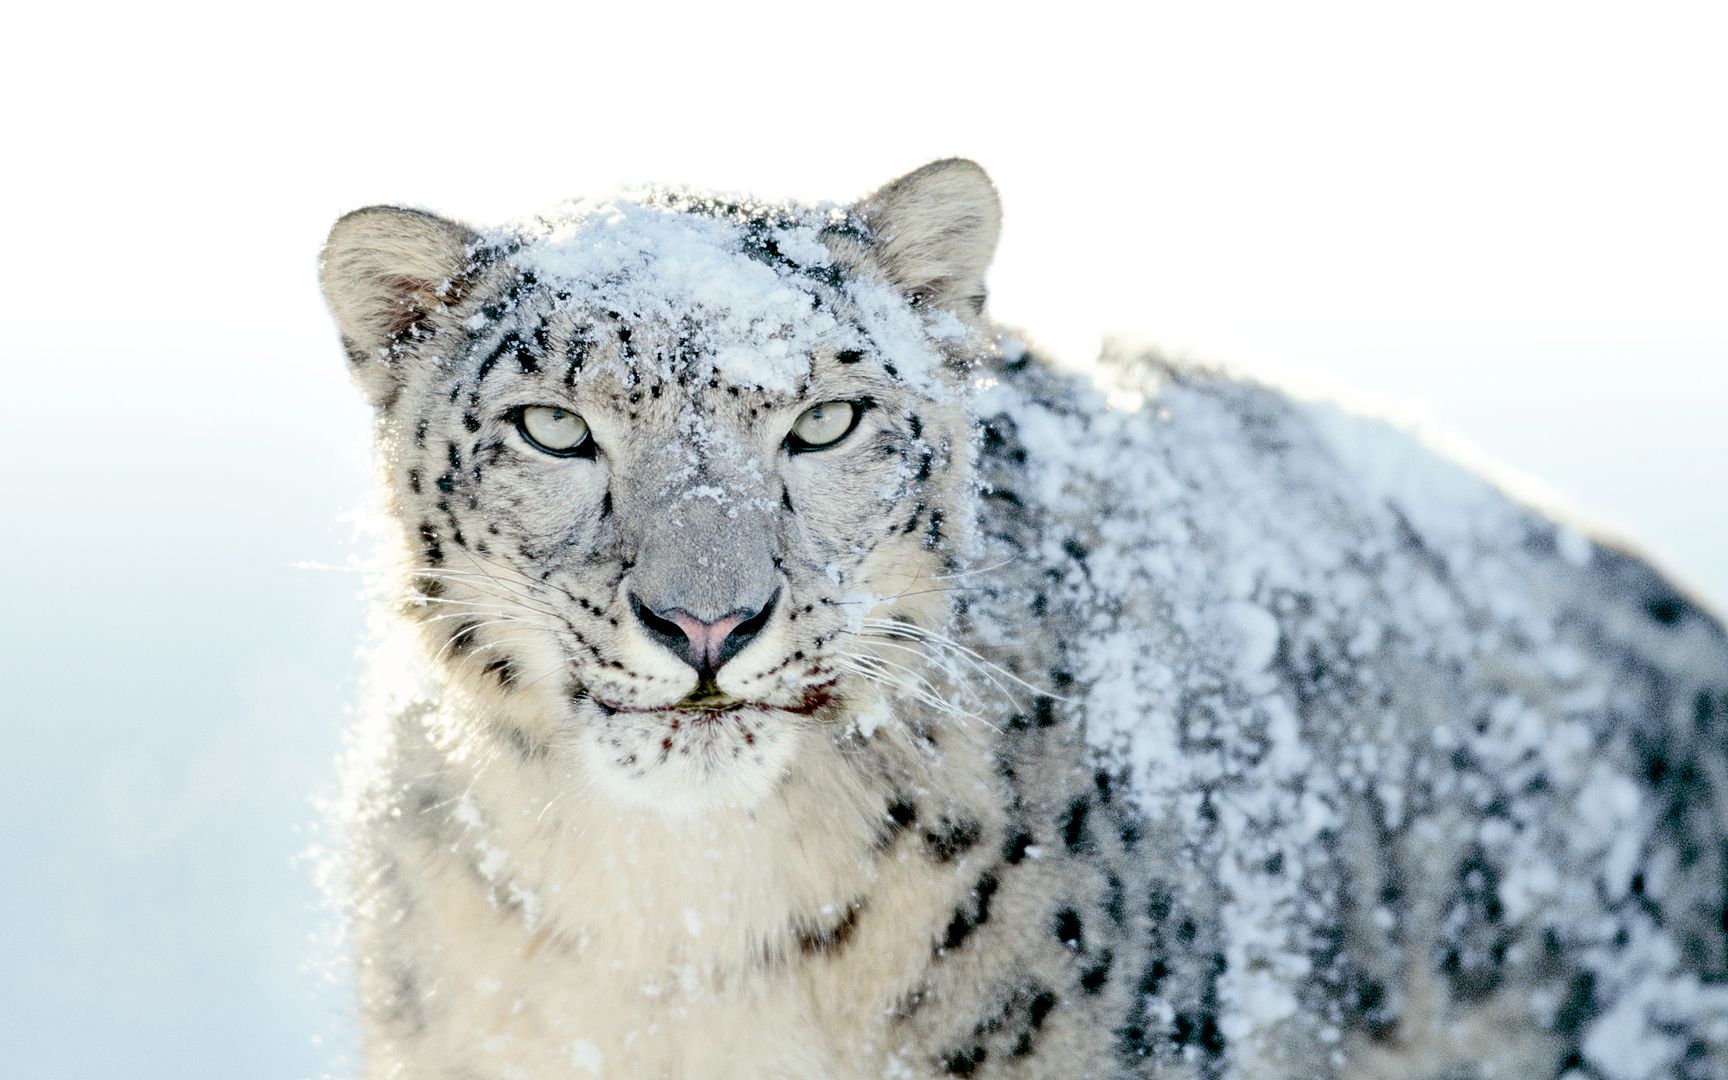 Snow-Leopard_zpsa950cba5.jpg